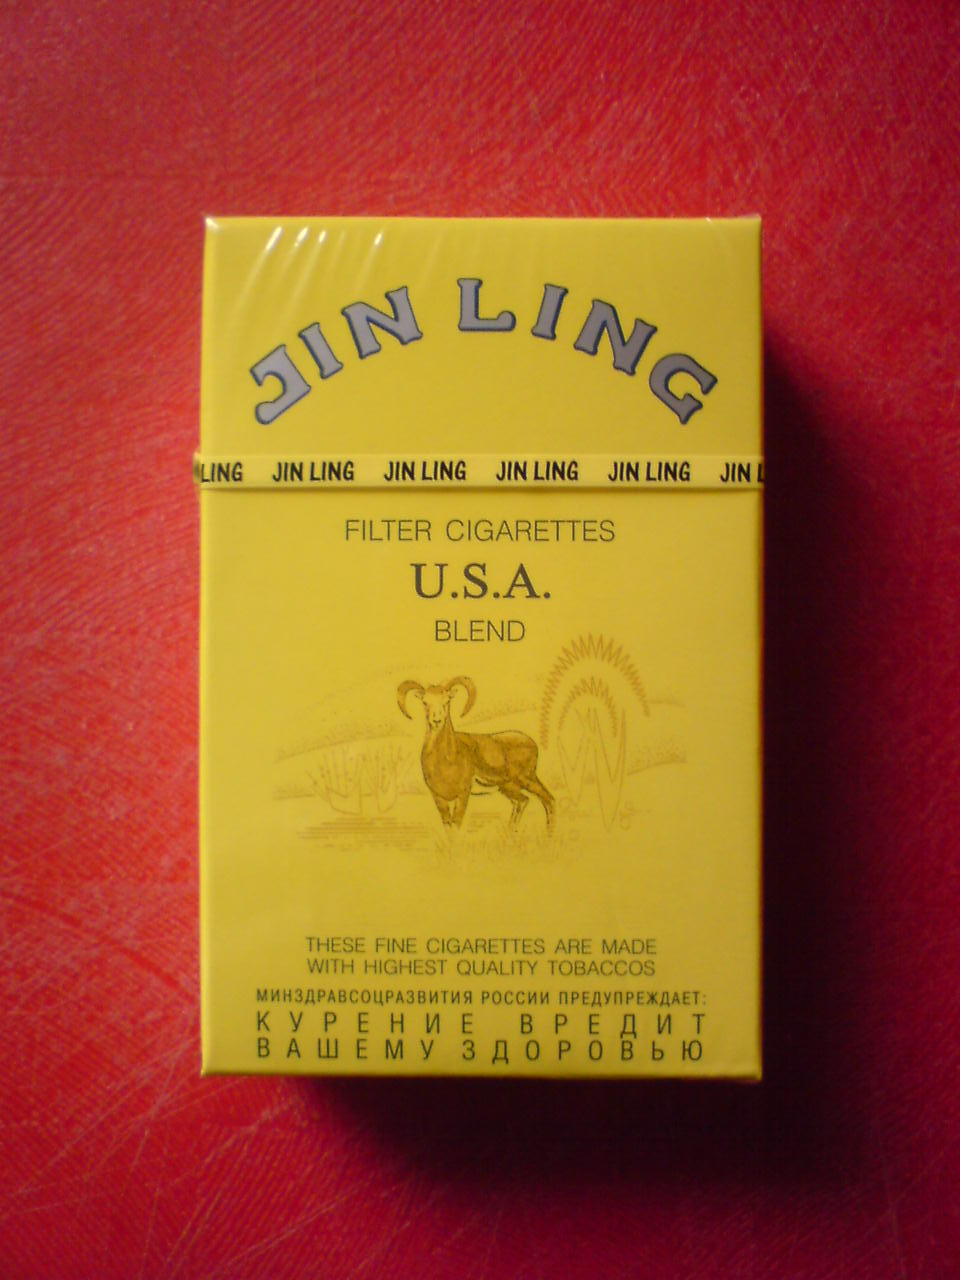 Jin Ling Cigarettes (USA Blend) - Russia